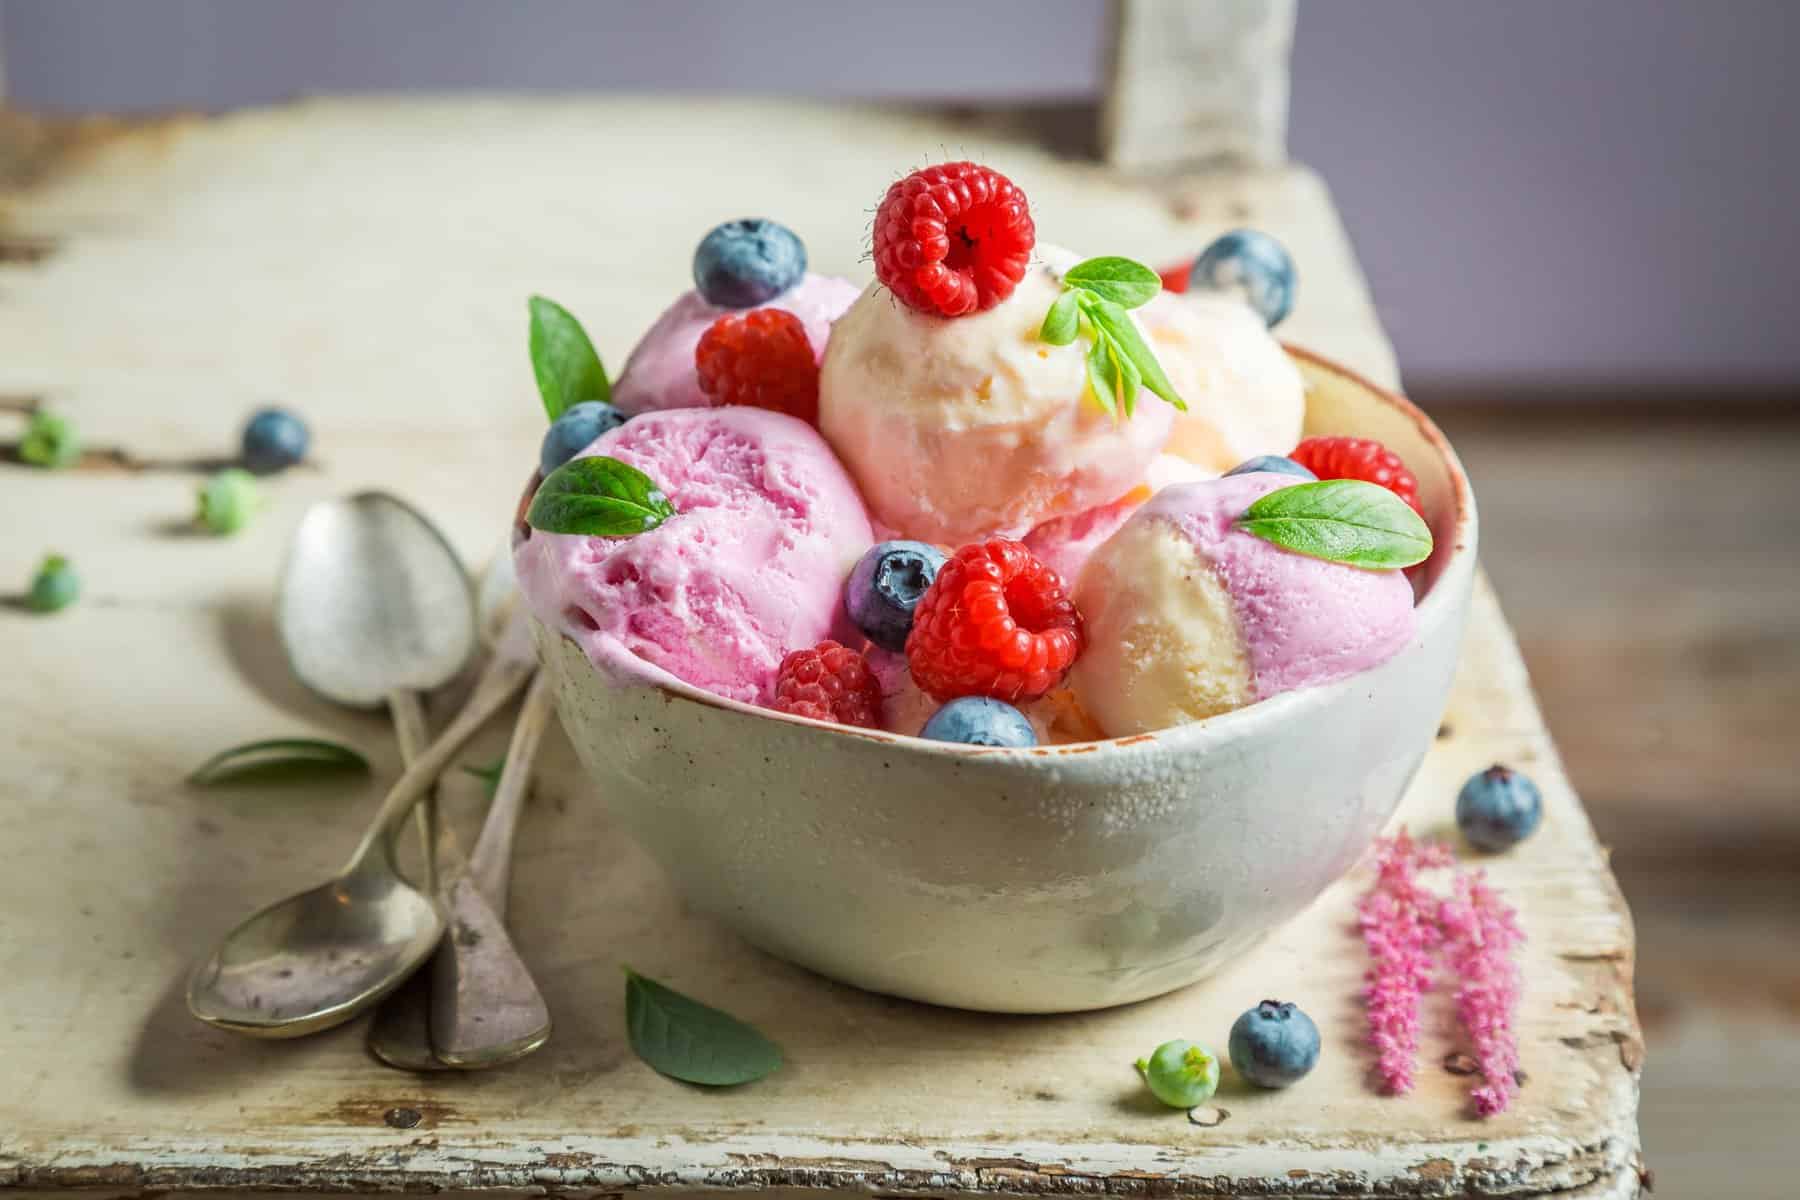 Sweet and tasty ice cream made of fruits and yogurt